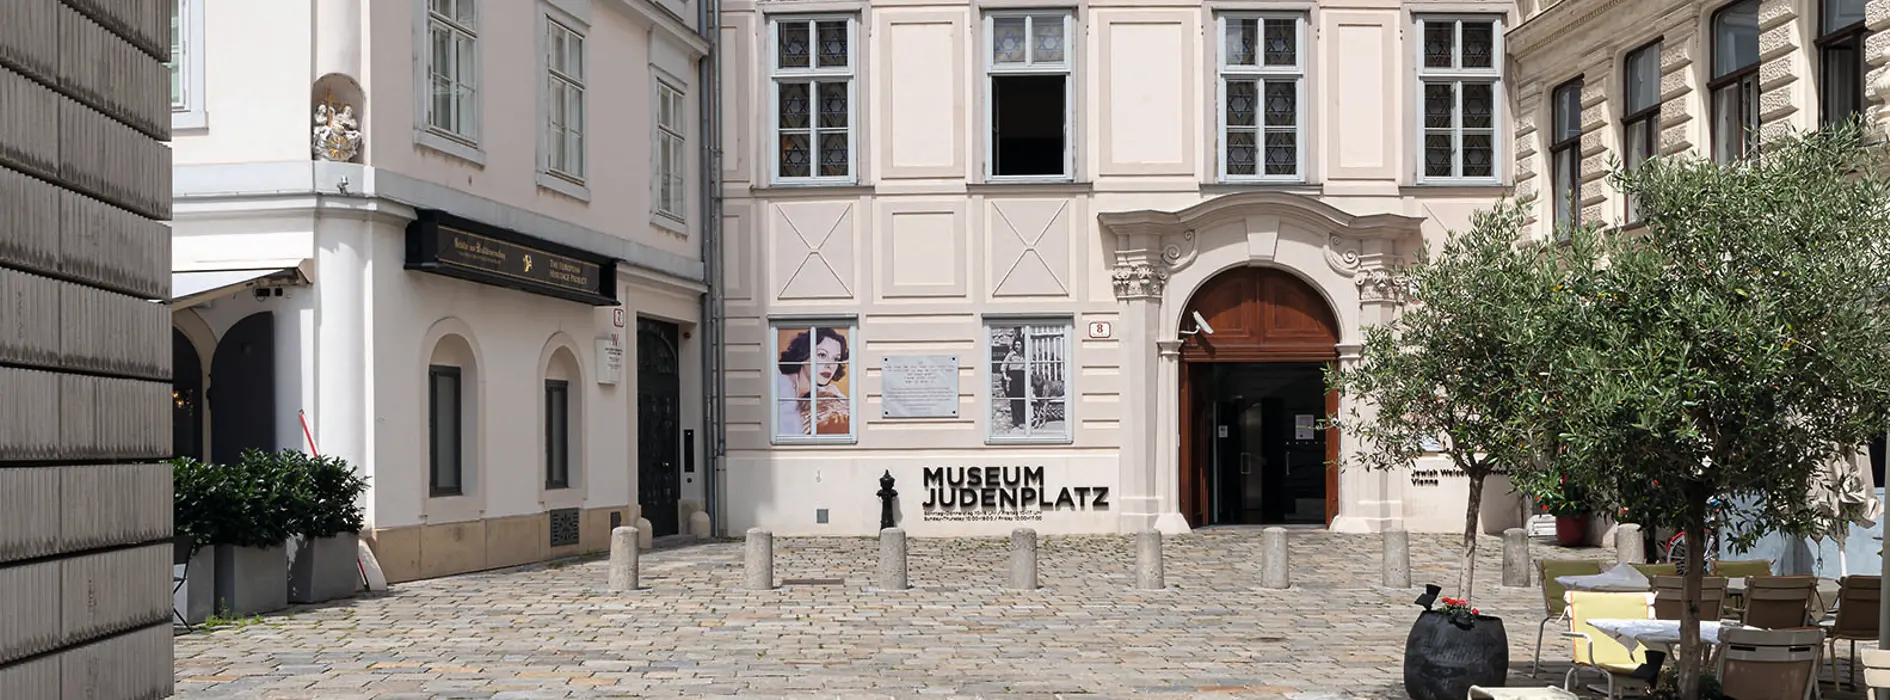 Museo Judenplatz